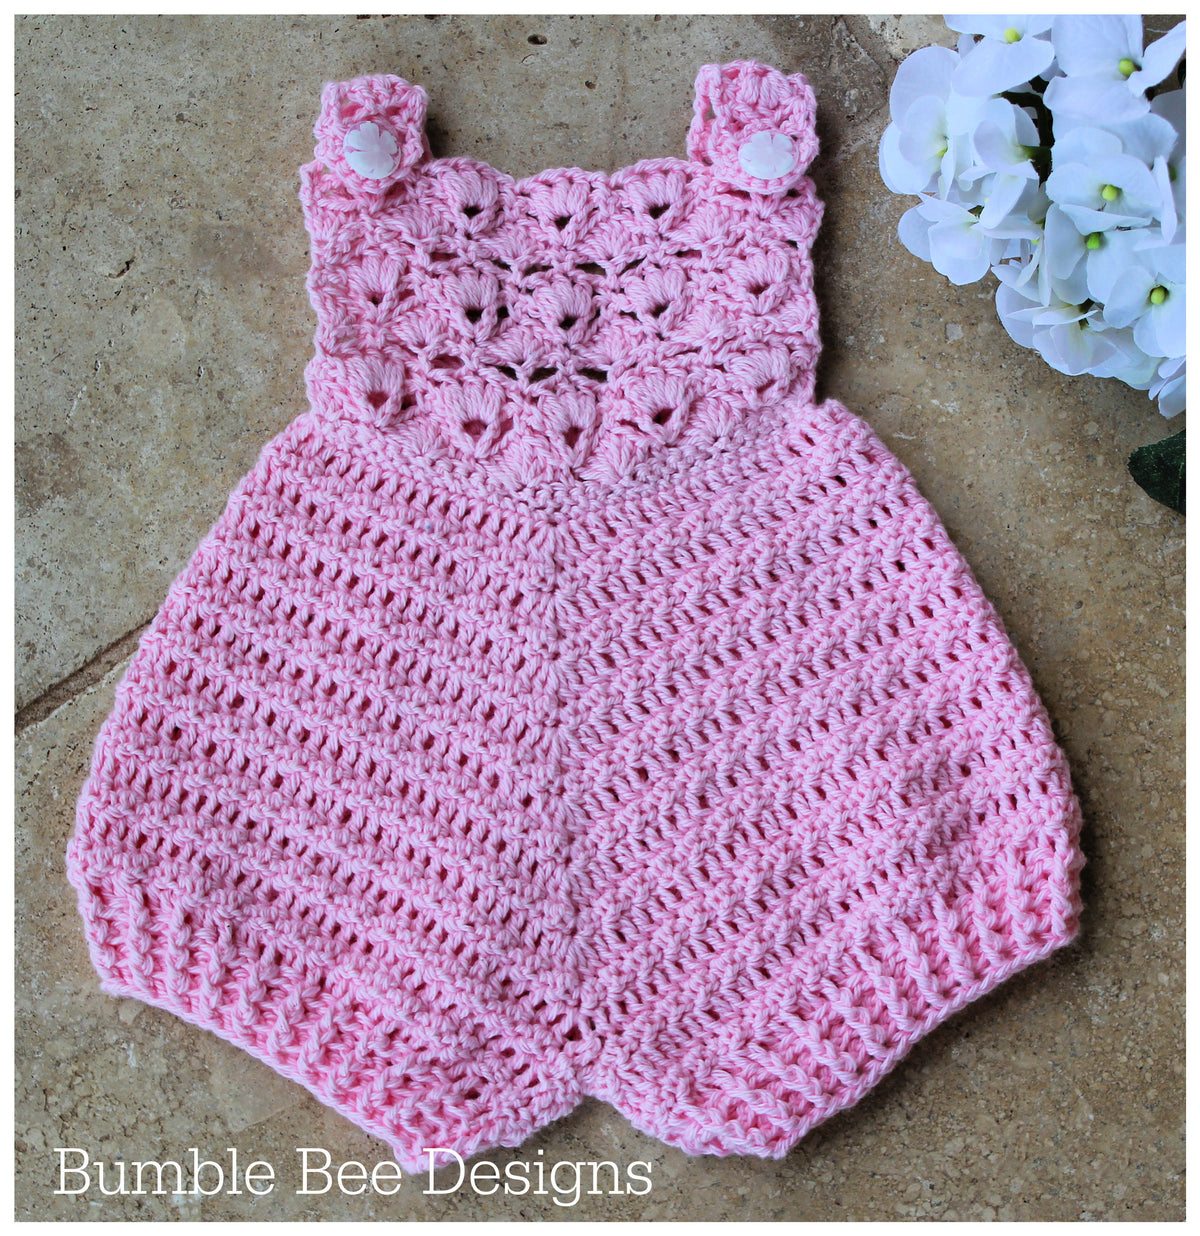 crochet cotton baby romper, rose pink, size 0-3 months. soft australian cotton.